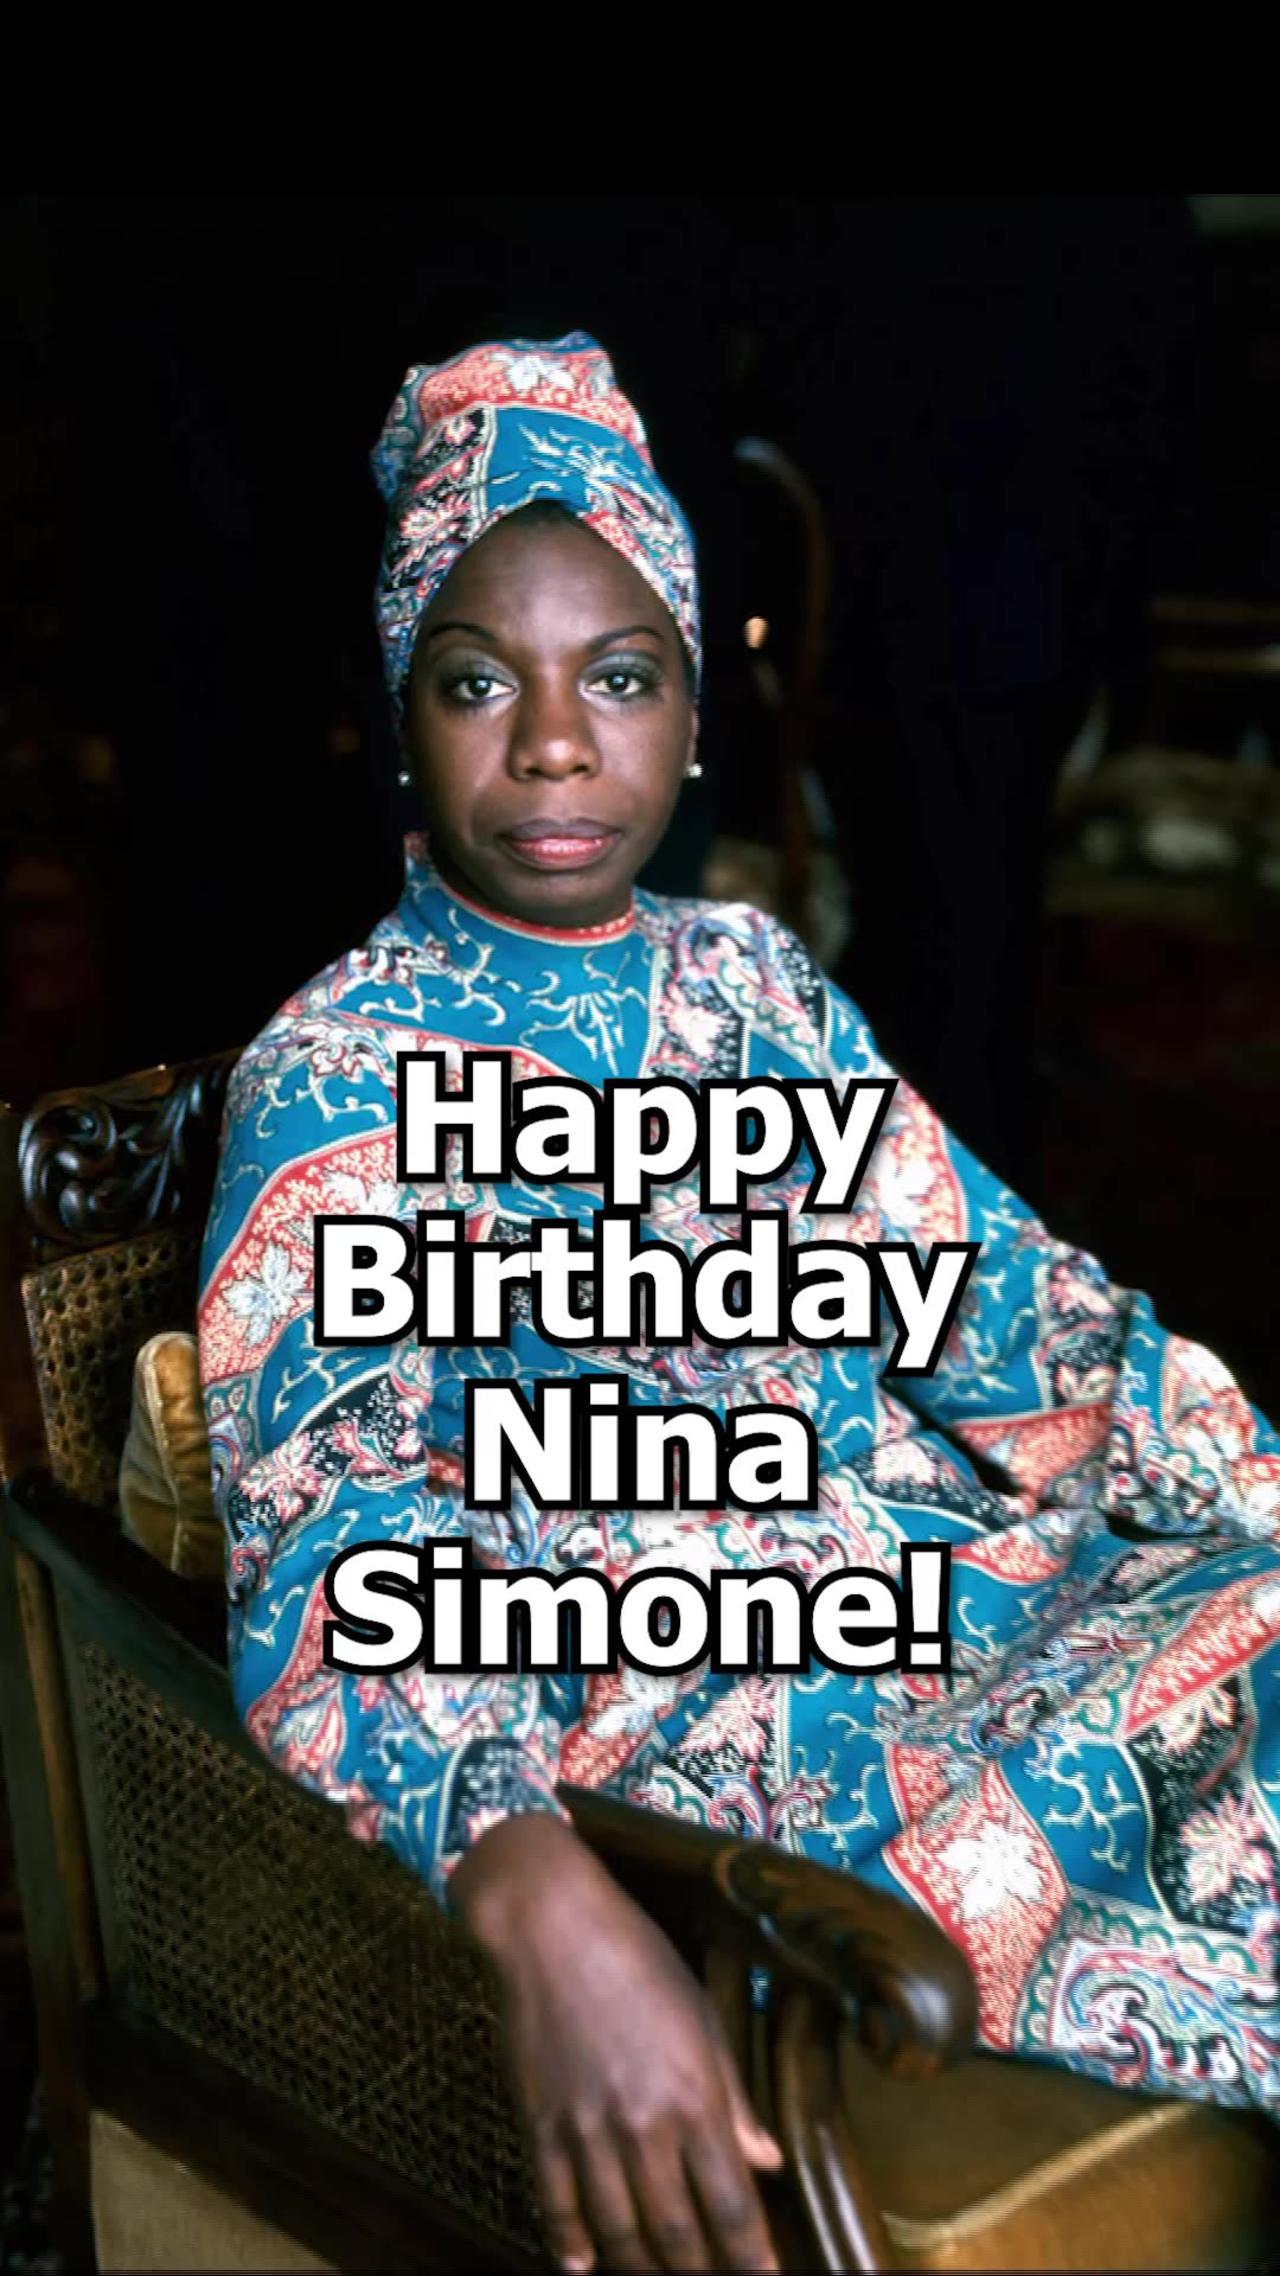 NINA SIMONE'S BIRTHDAY!! 🎉 - February 21st, 1933